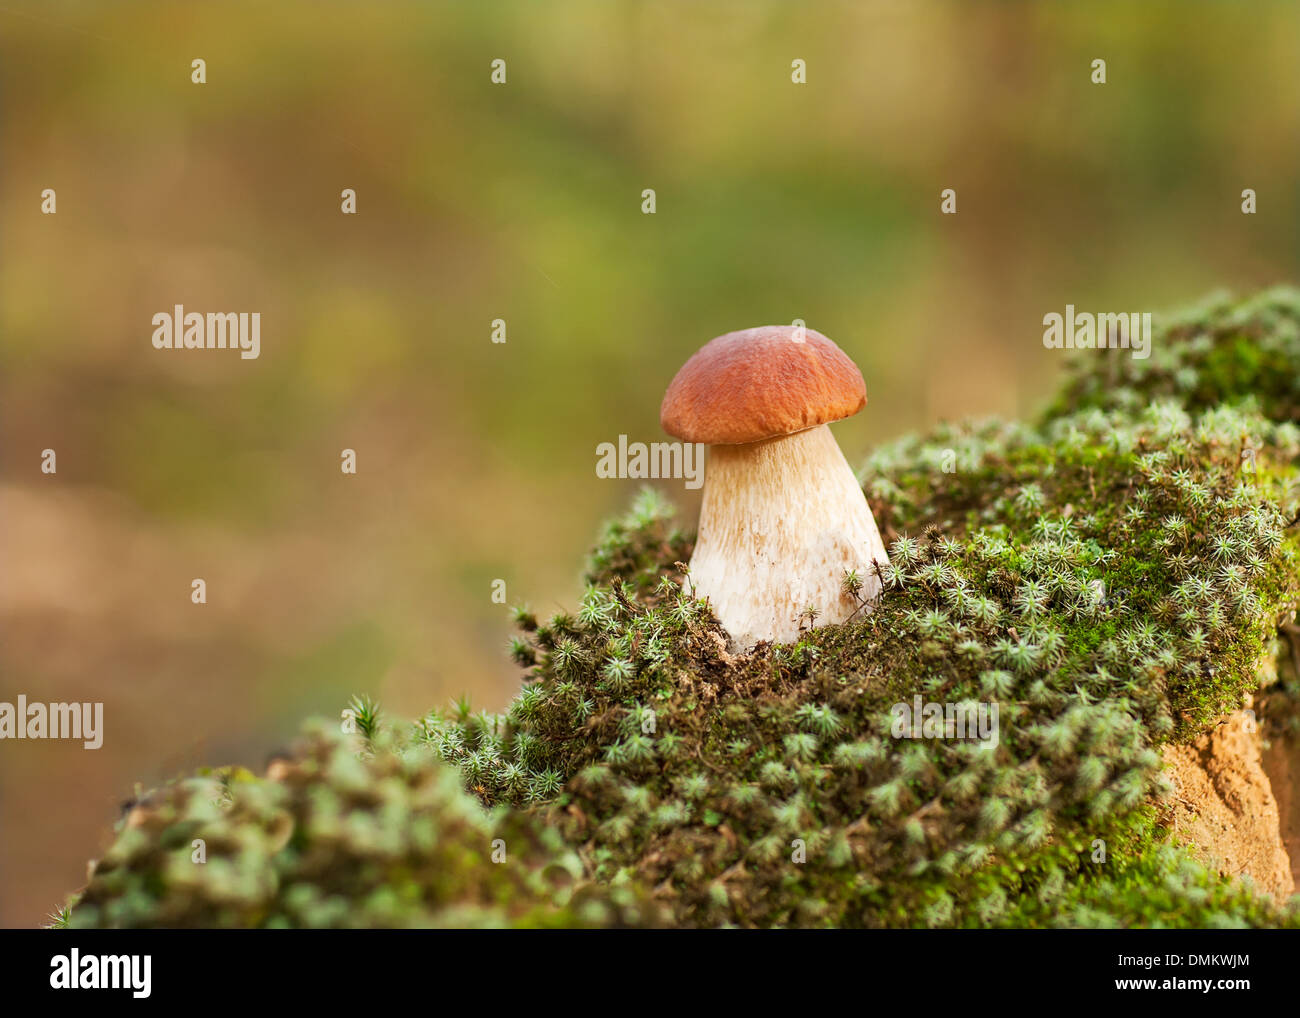 Oak Mushrooms in the moss Stock Photo